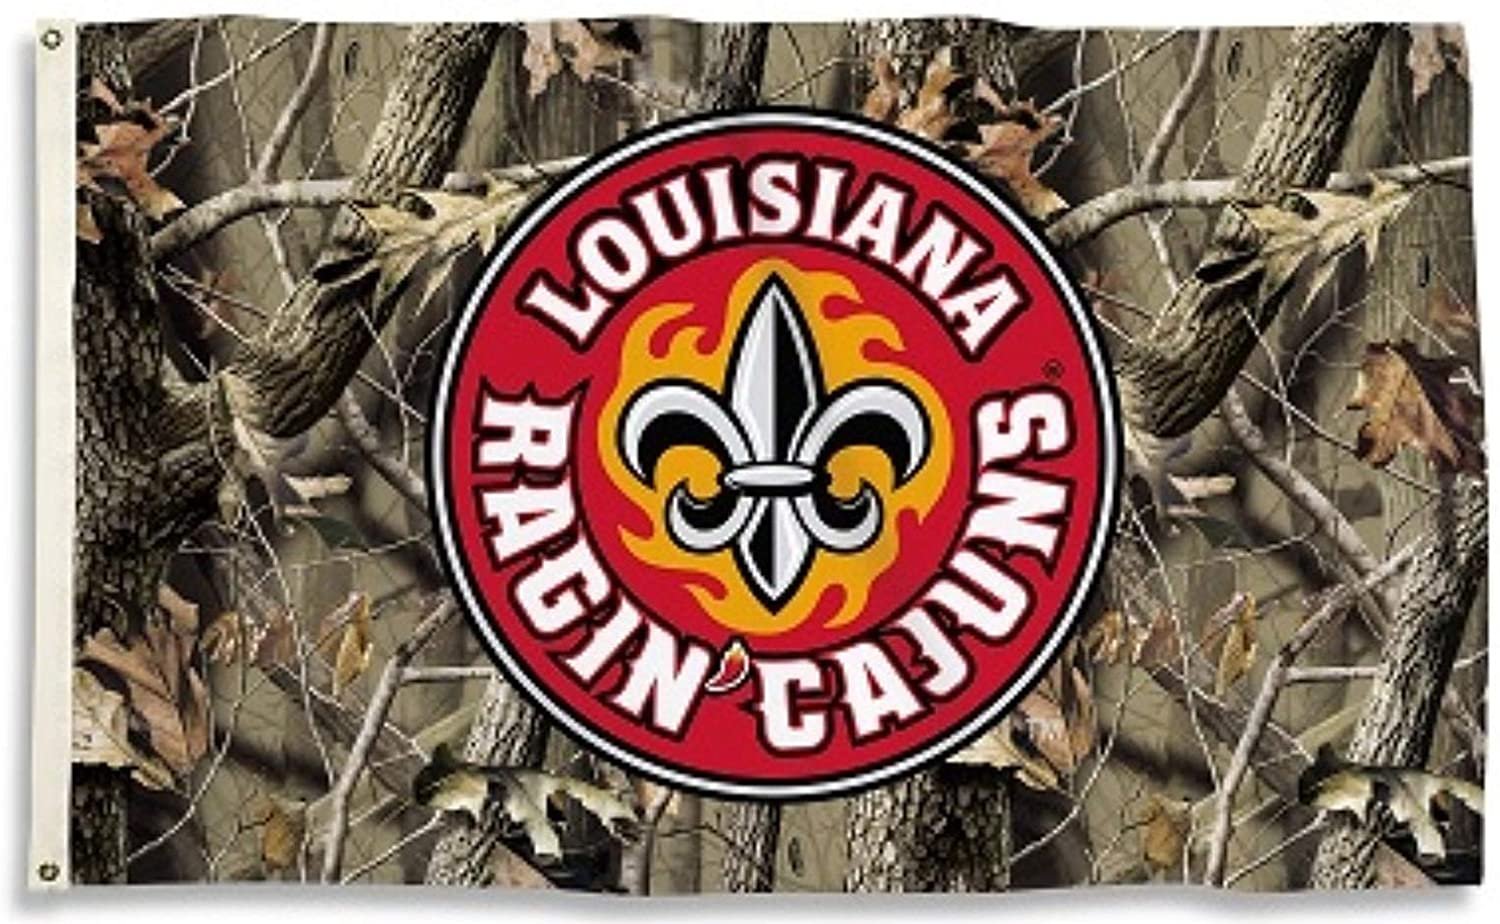 University of Louisiana Lafayette Ragin Cajuns Premium 3x5 Feet Flag Banner, Camo Design, Metal Grommets, Outdoor Use, Single Sided